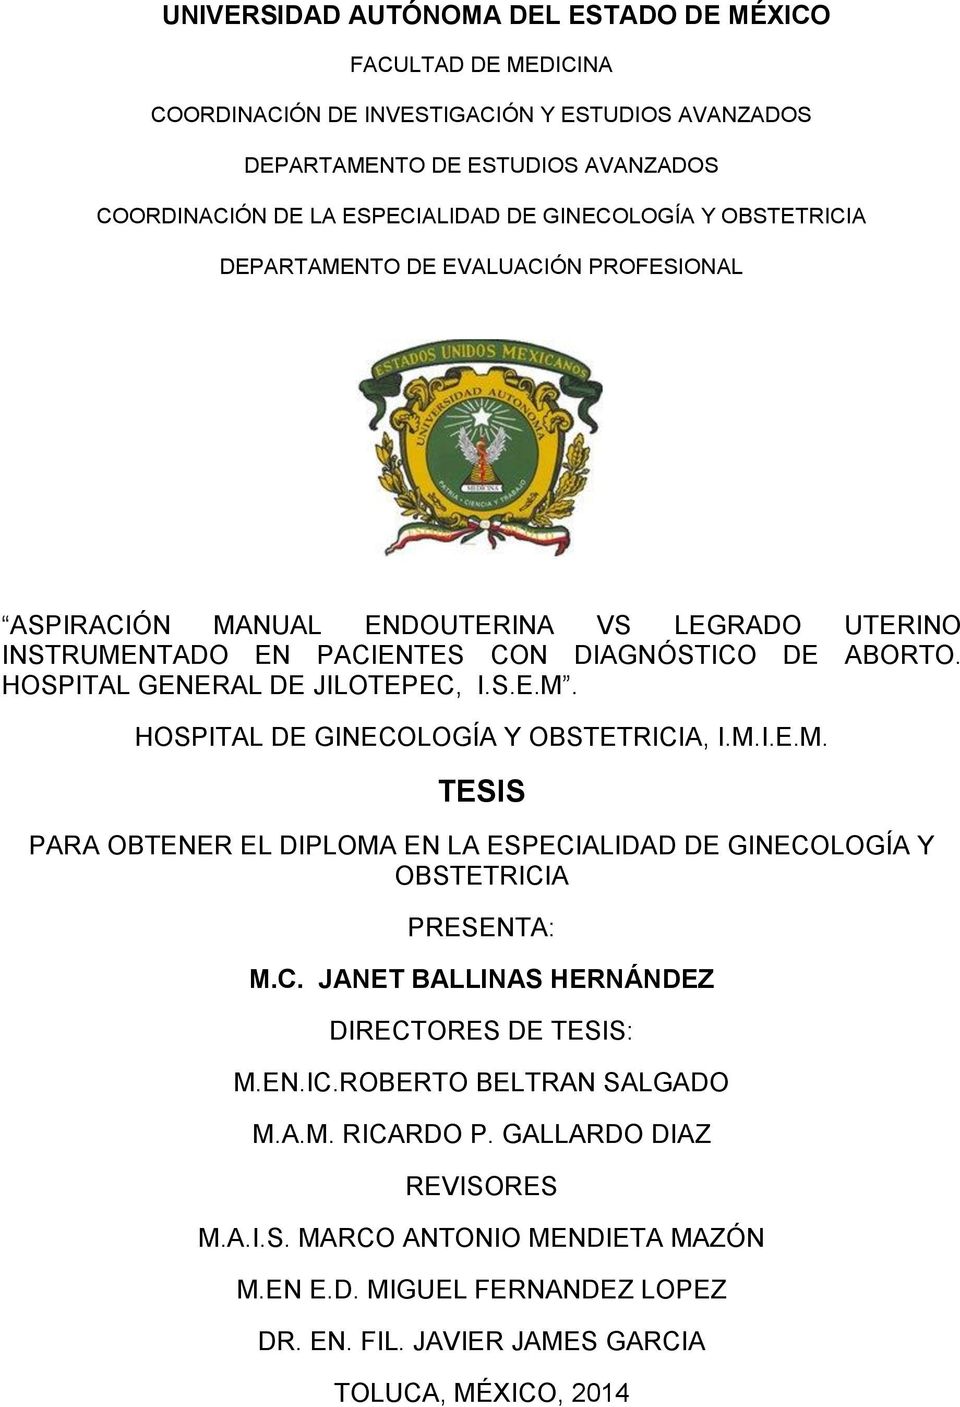 HOSPITAL GENERAL DE JILOTEPEC, I.S.E.M. HOSPITAL DE GINECOLOGÍA Y OBSTETRICIA, I.M.I.E.M. TESIS PARA OBTENER EL DIPLOMA EN LA ESPECIALIDAD DE GINECOLOGÍA Y OBSTETRICIA PRESENTA: M.C. JANET BALLINAS HERNÁNDEZ DIRECTORES DE TESIS: M.